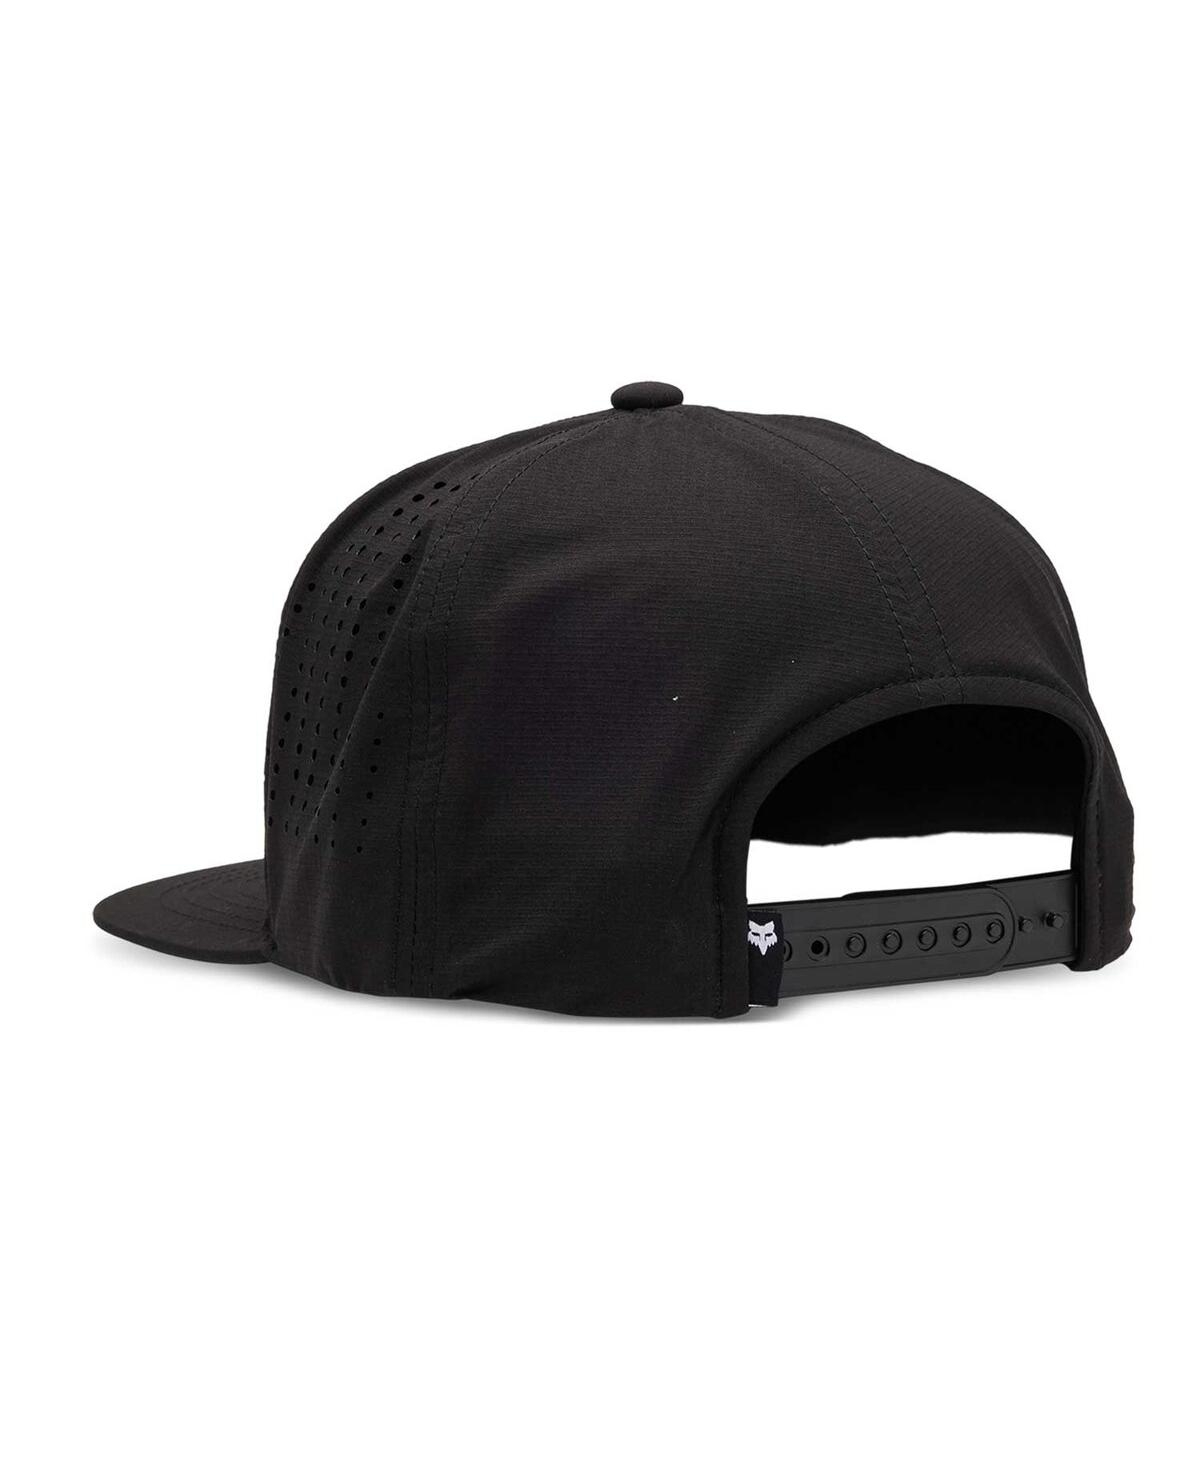 Shop Fox Men's  Black Non-stop Tech Snapback Hat